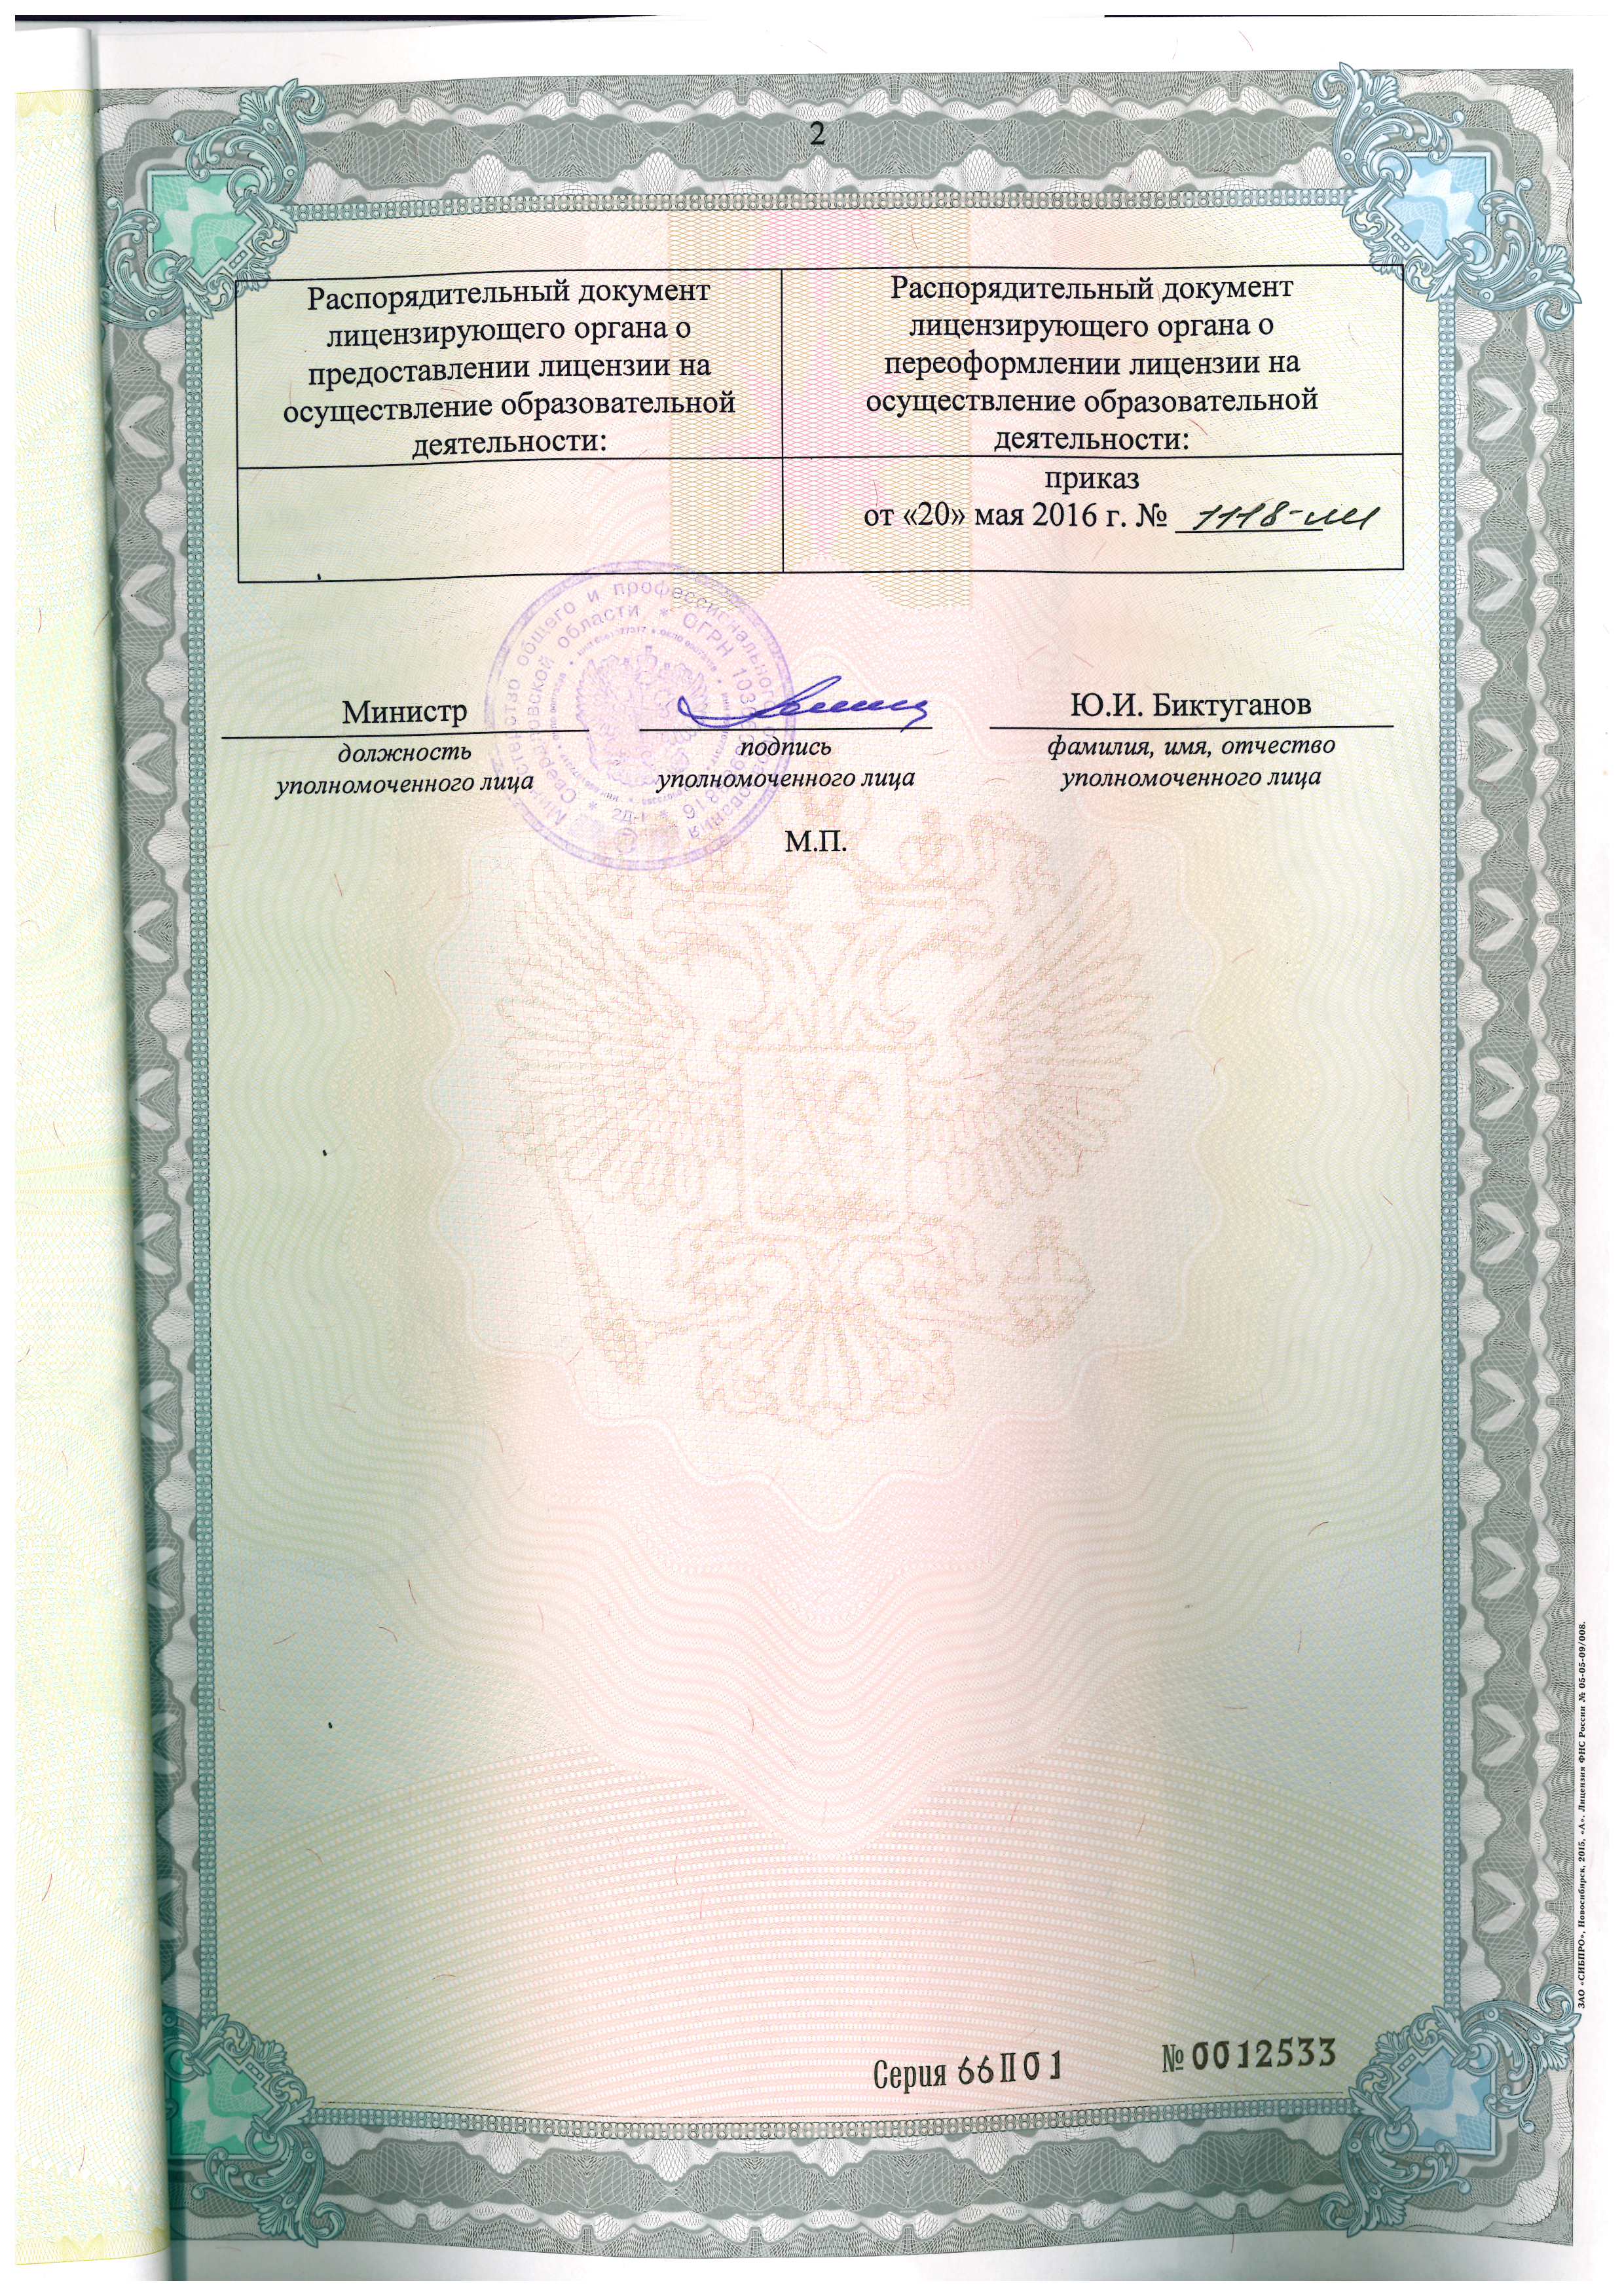 license 1